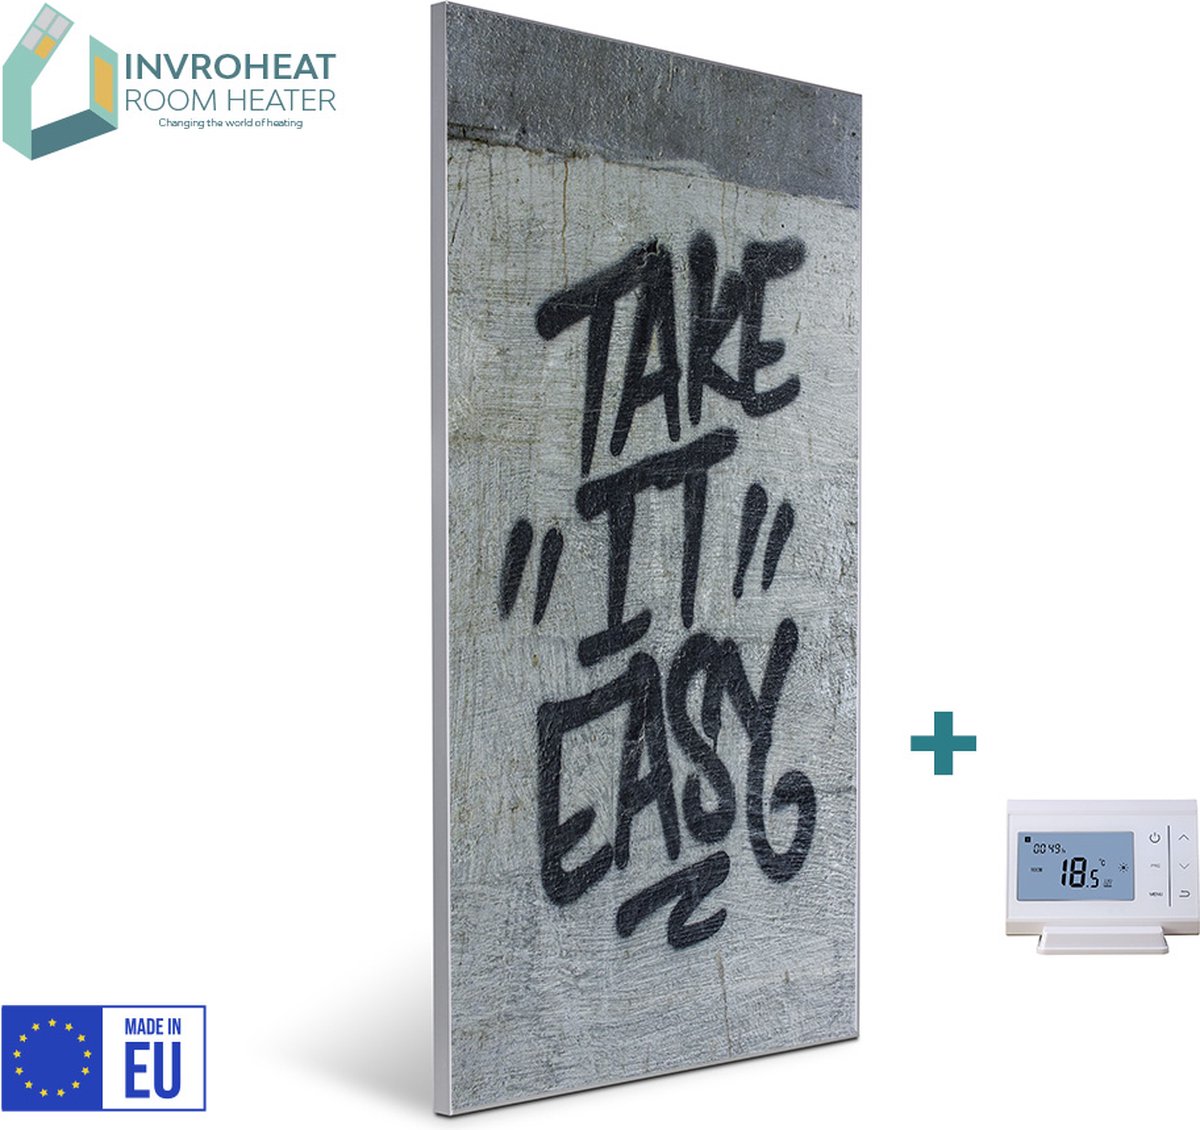 NIEUW: Invroheat infrarood verwarmingspaneel Take it Easy - 800W - 61x91.5cm - Afbeelding verwisselbaar - met thermostaat en afstandsbediening